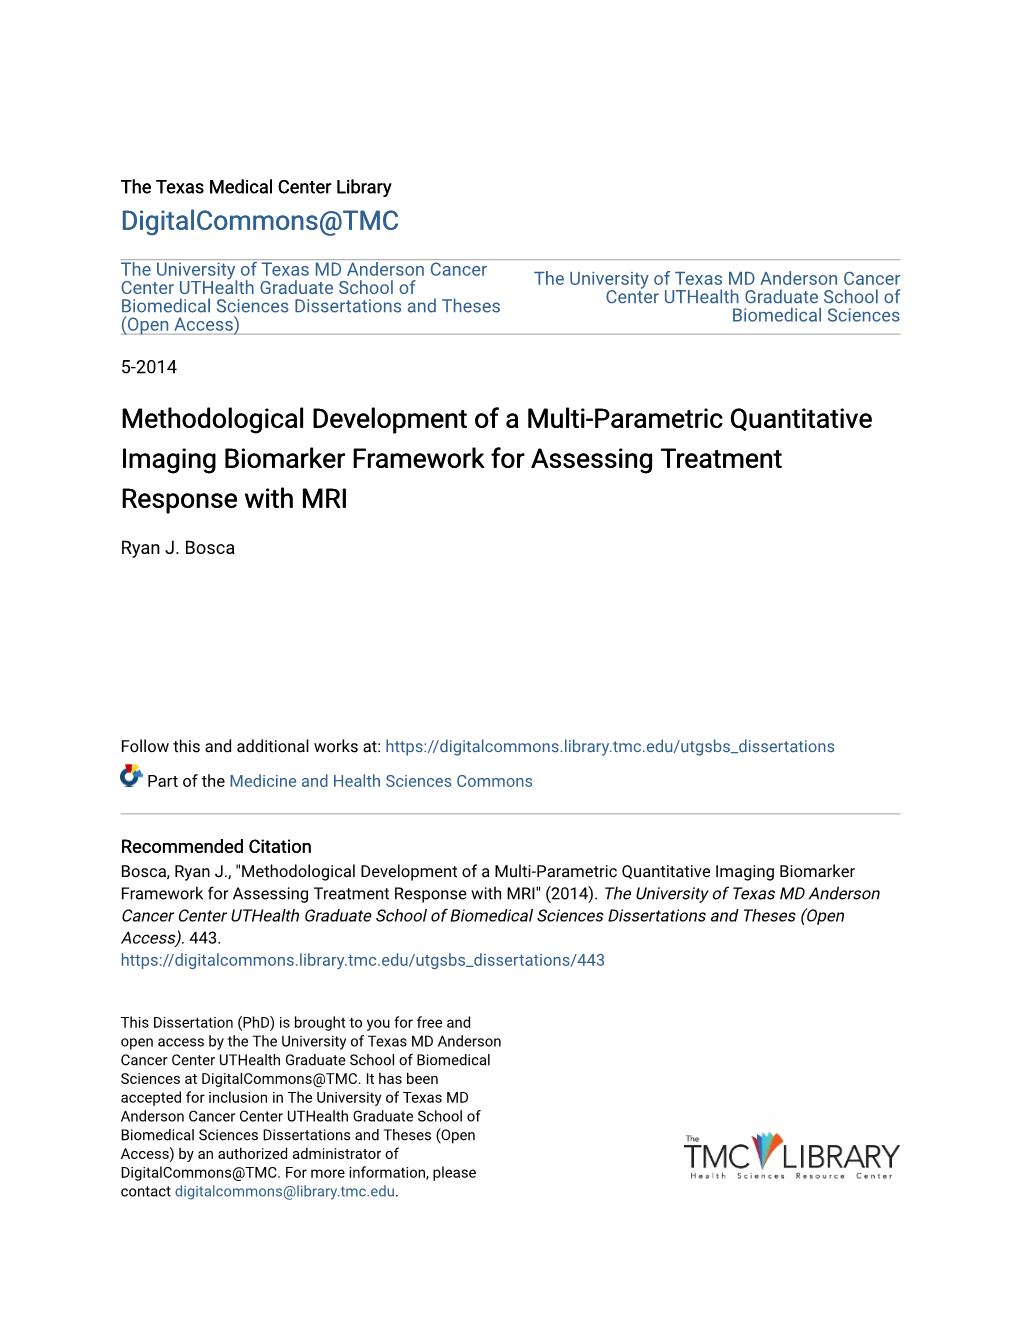 Methodological Development of a Multi-Parametric Quantitative Imaging Biomarker Framework for Assessing Treatment Response with MRI